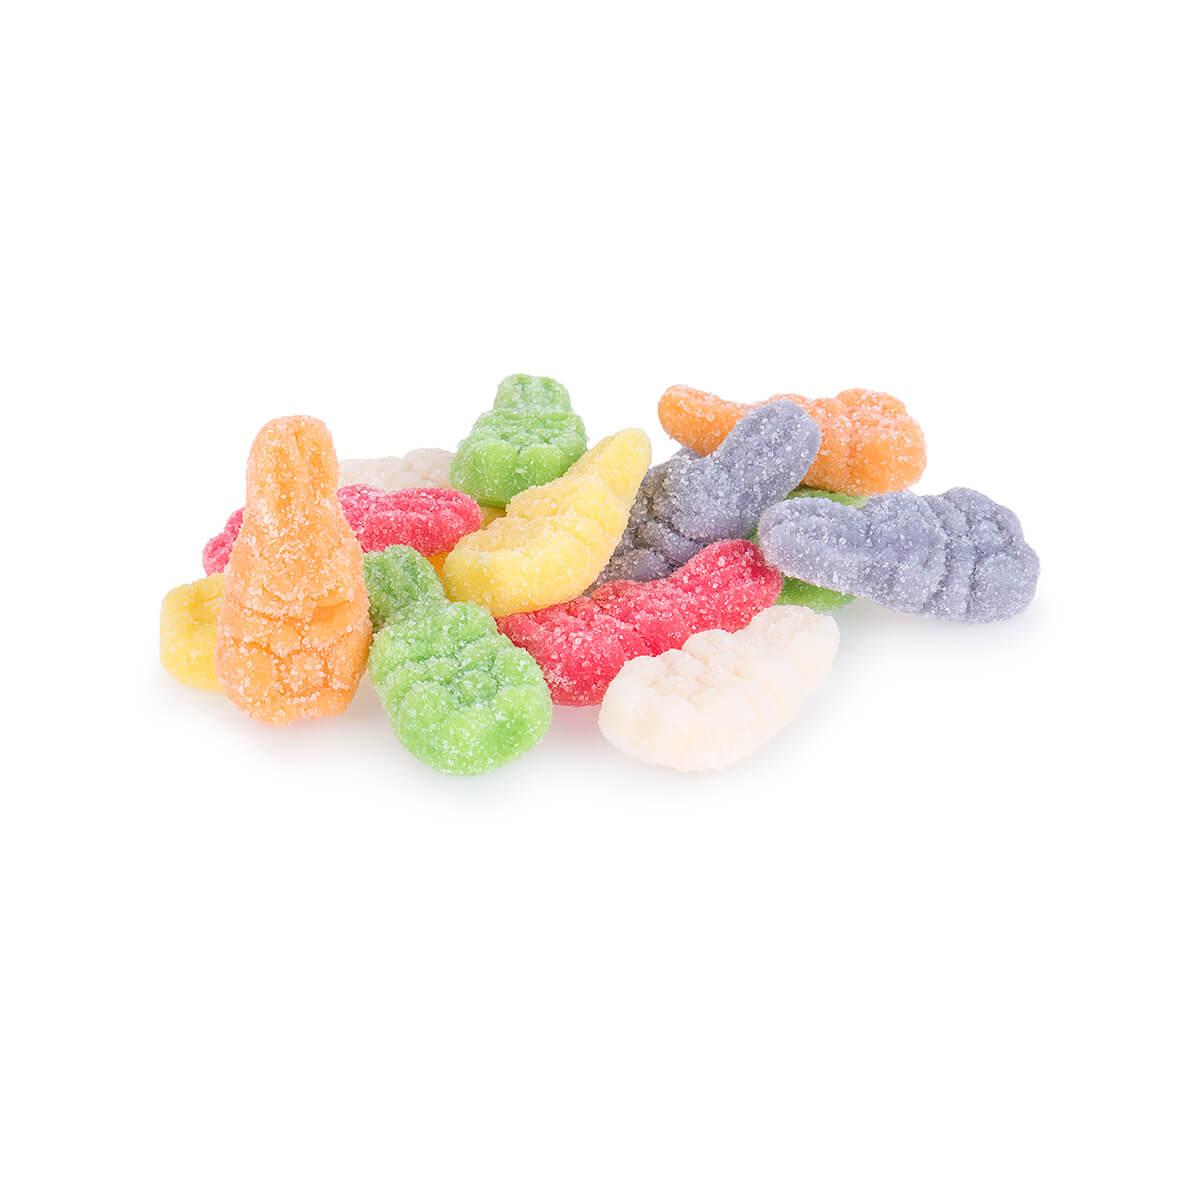  Gummi Easter Bunnies Candy - 1 Lb.